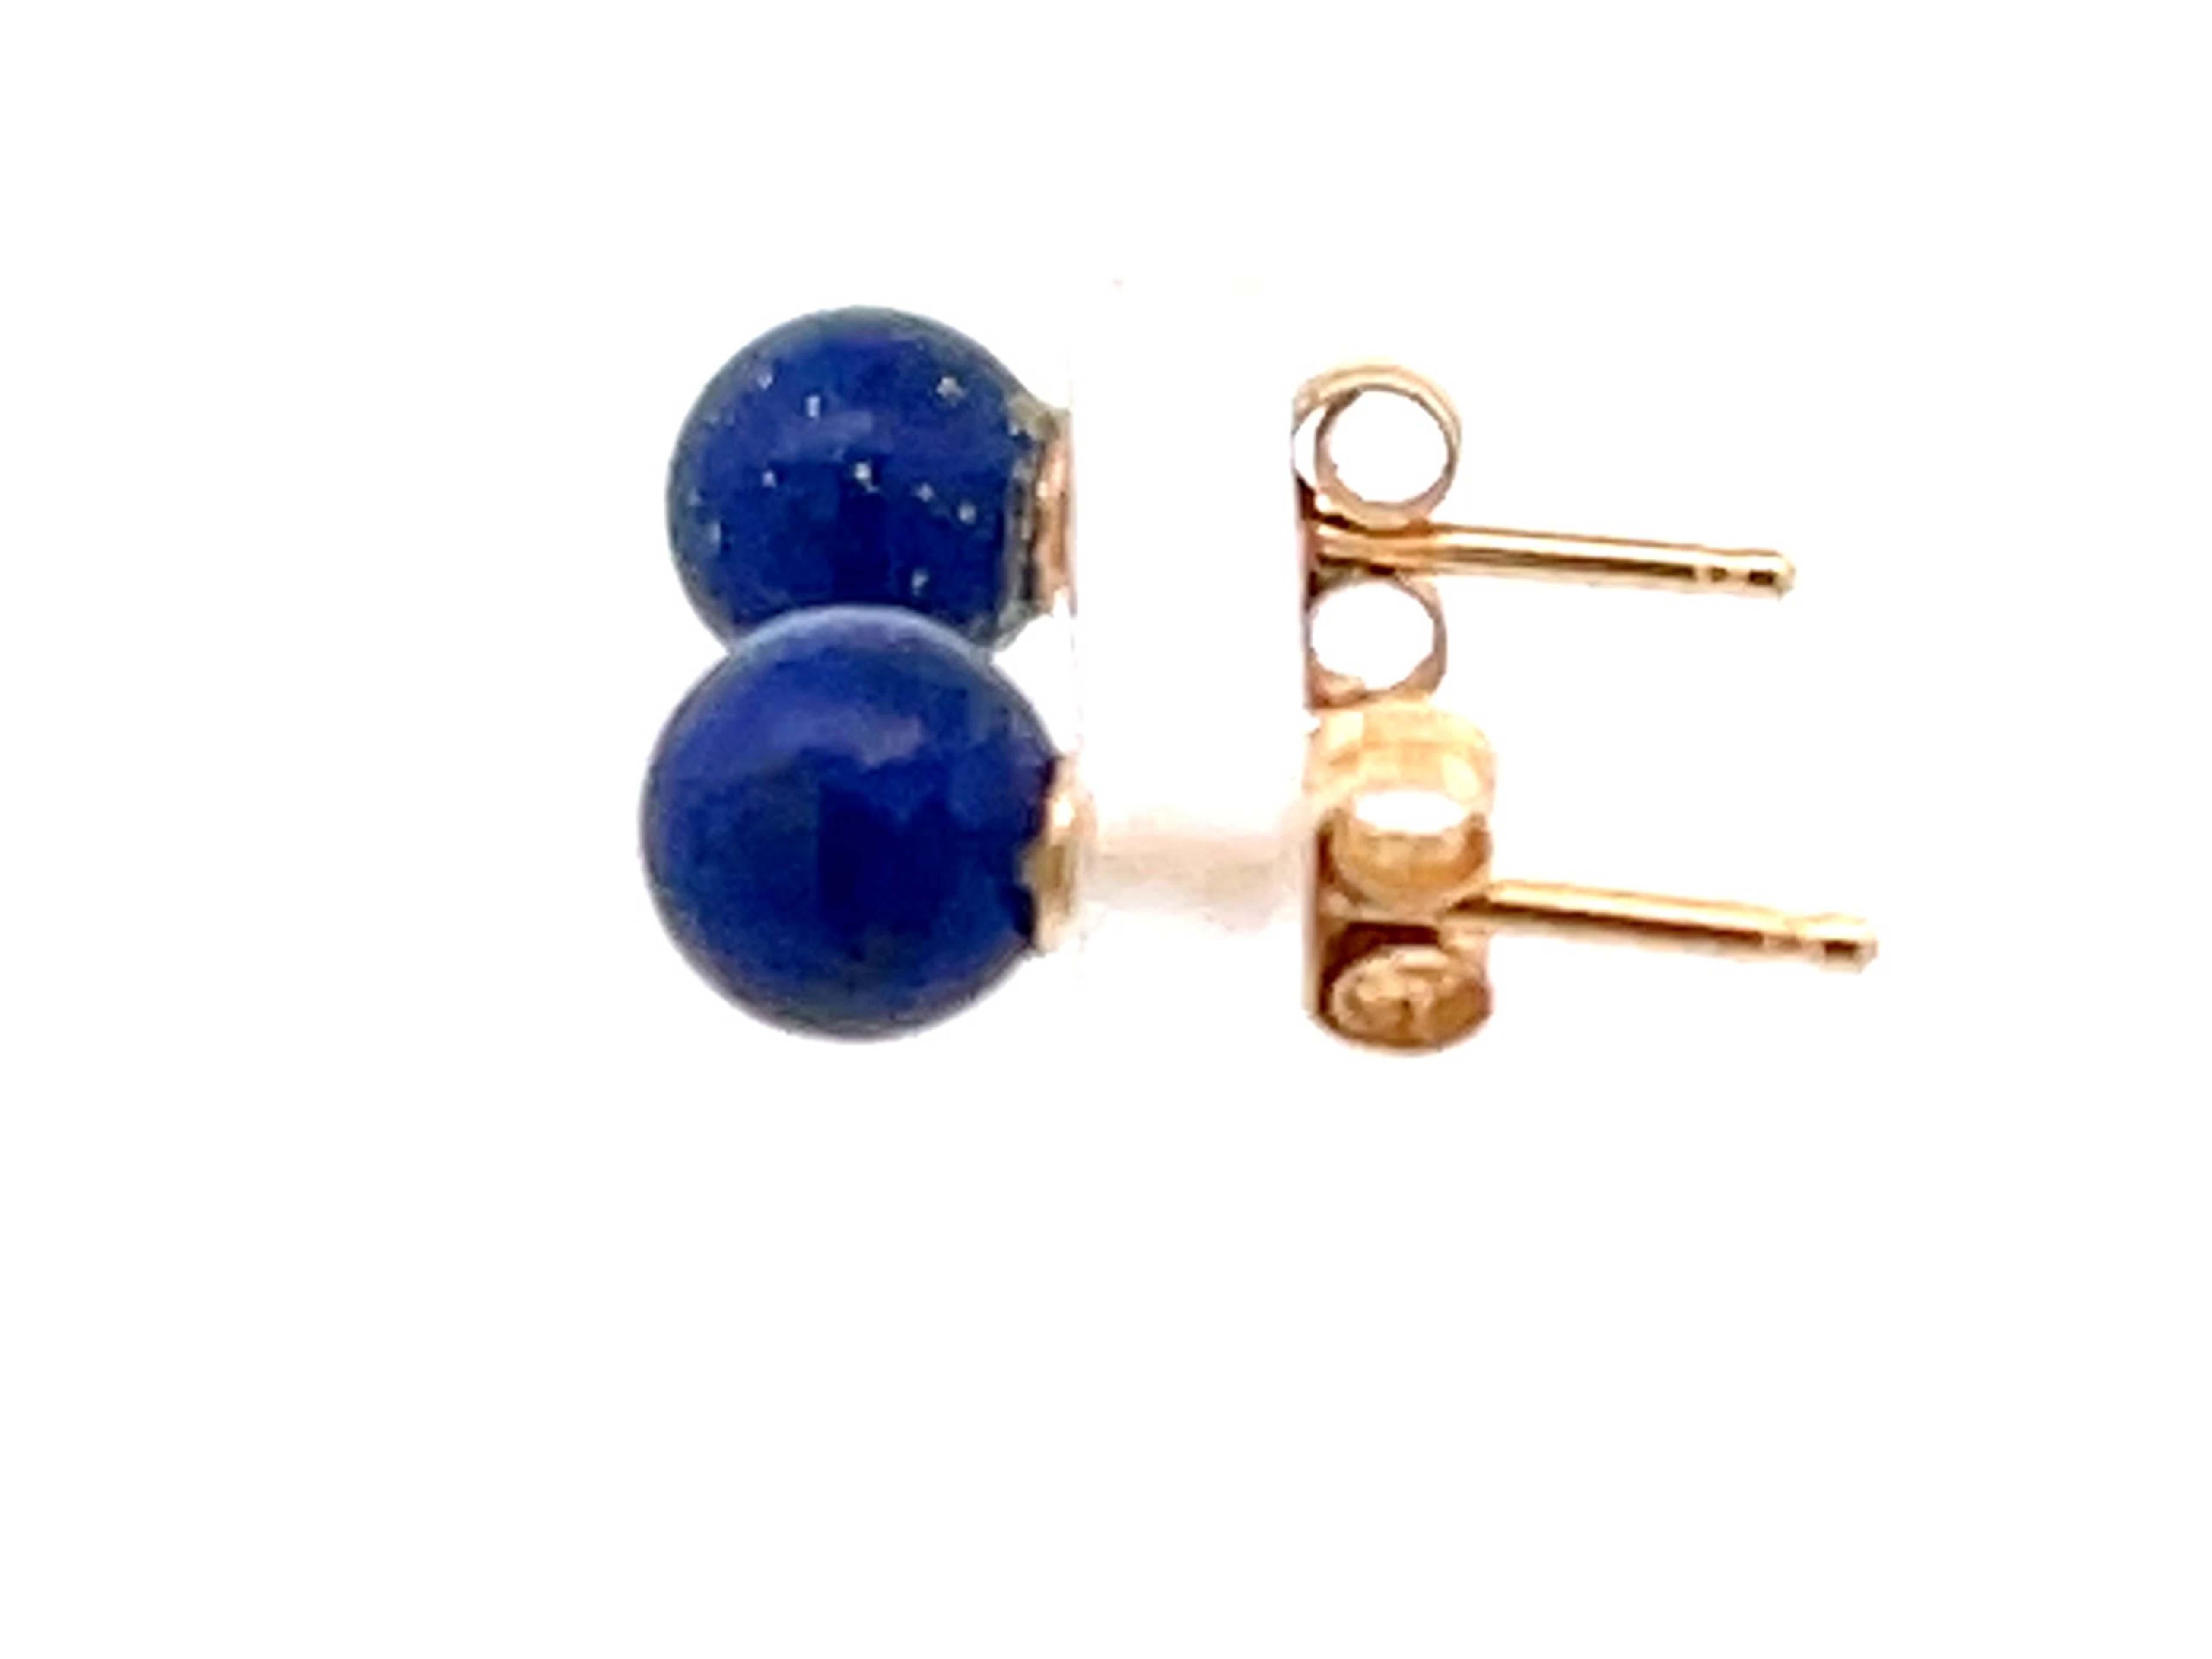 Round Cut Lapis Lazuli Stud Earrings in 14k Yellow Gold